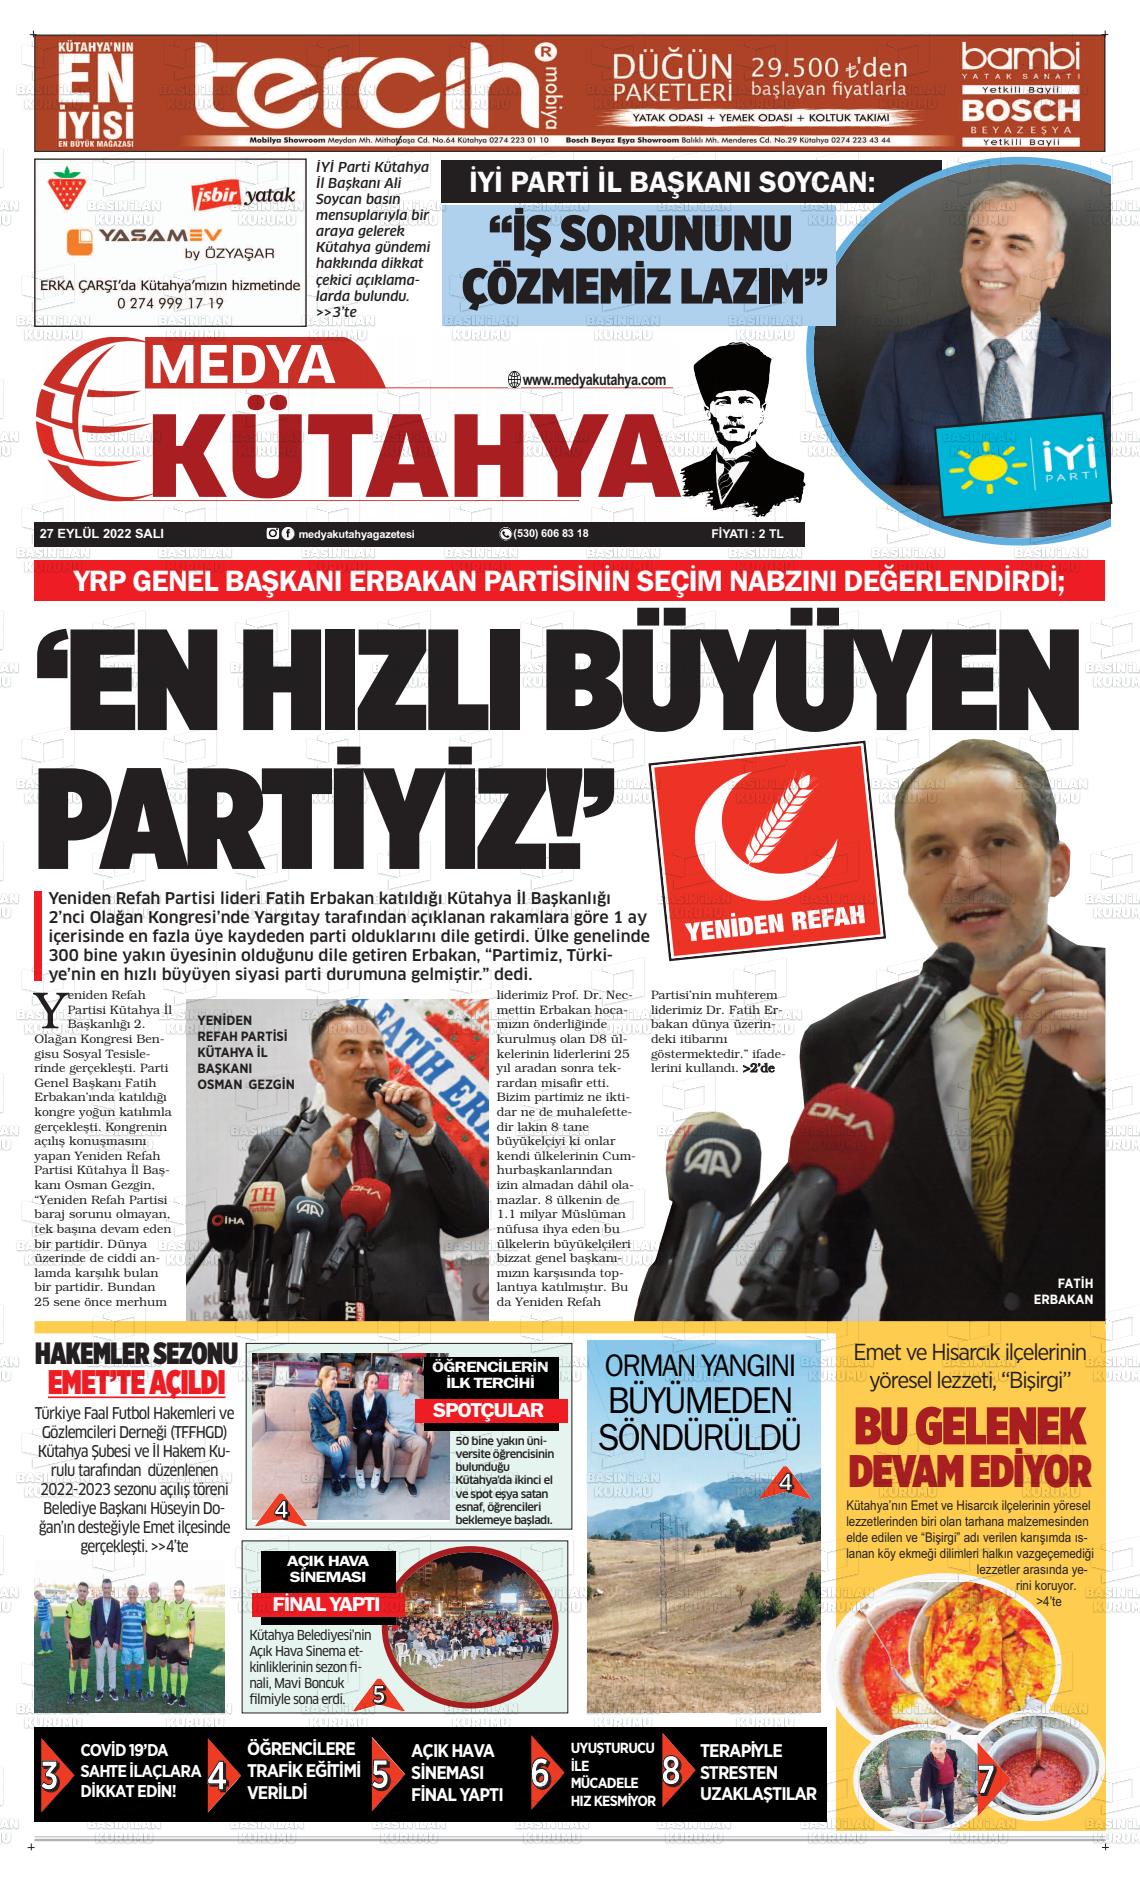 27 Eylül 2022 Medya Kütahya Gazete Manşeti